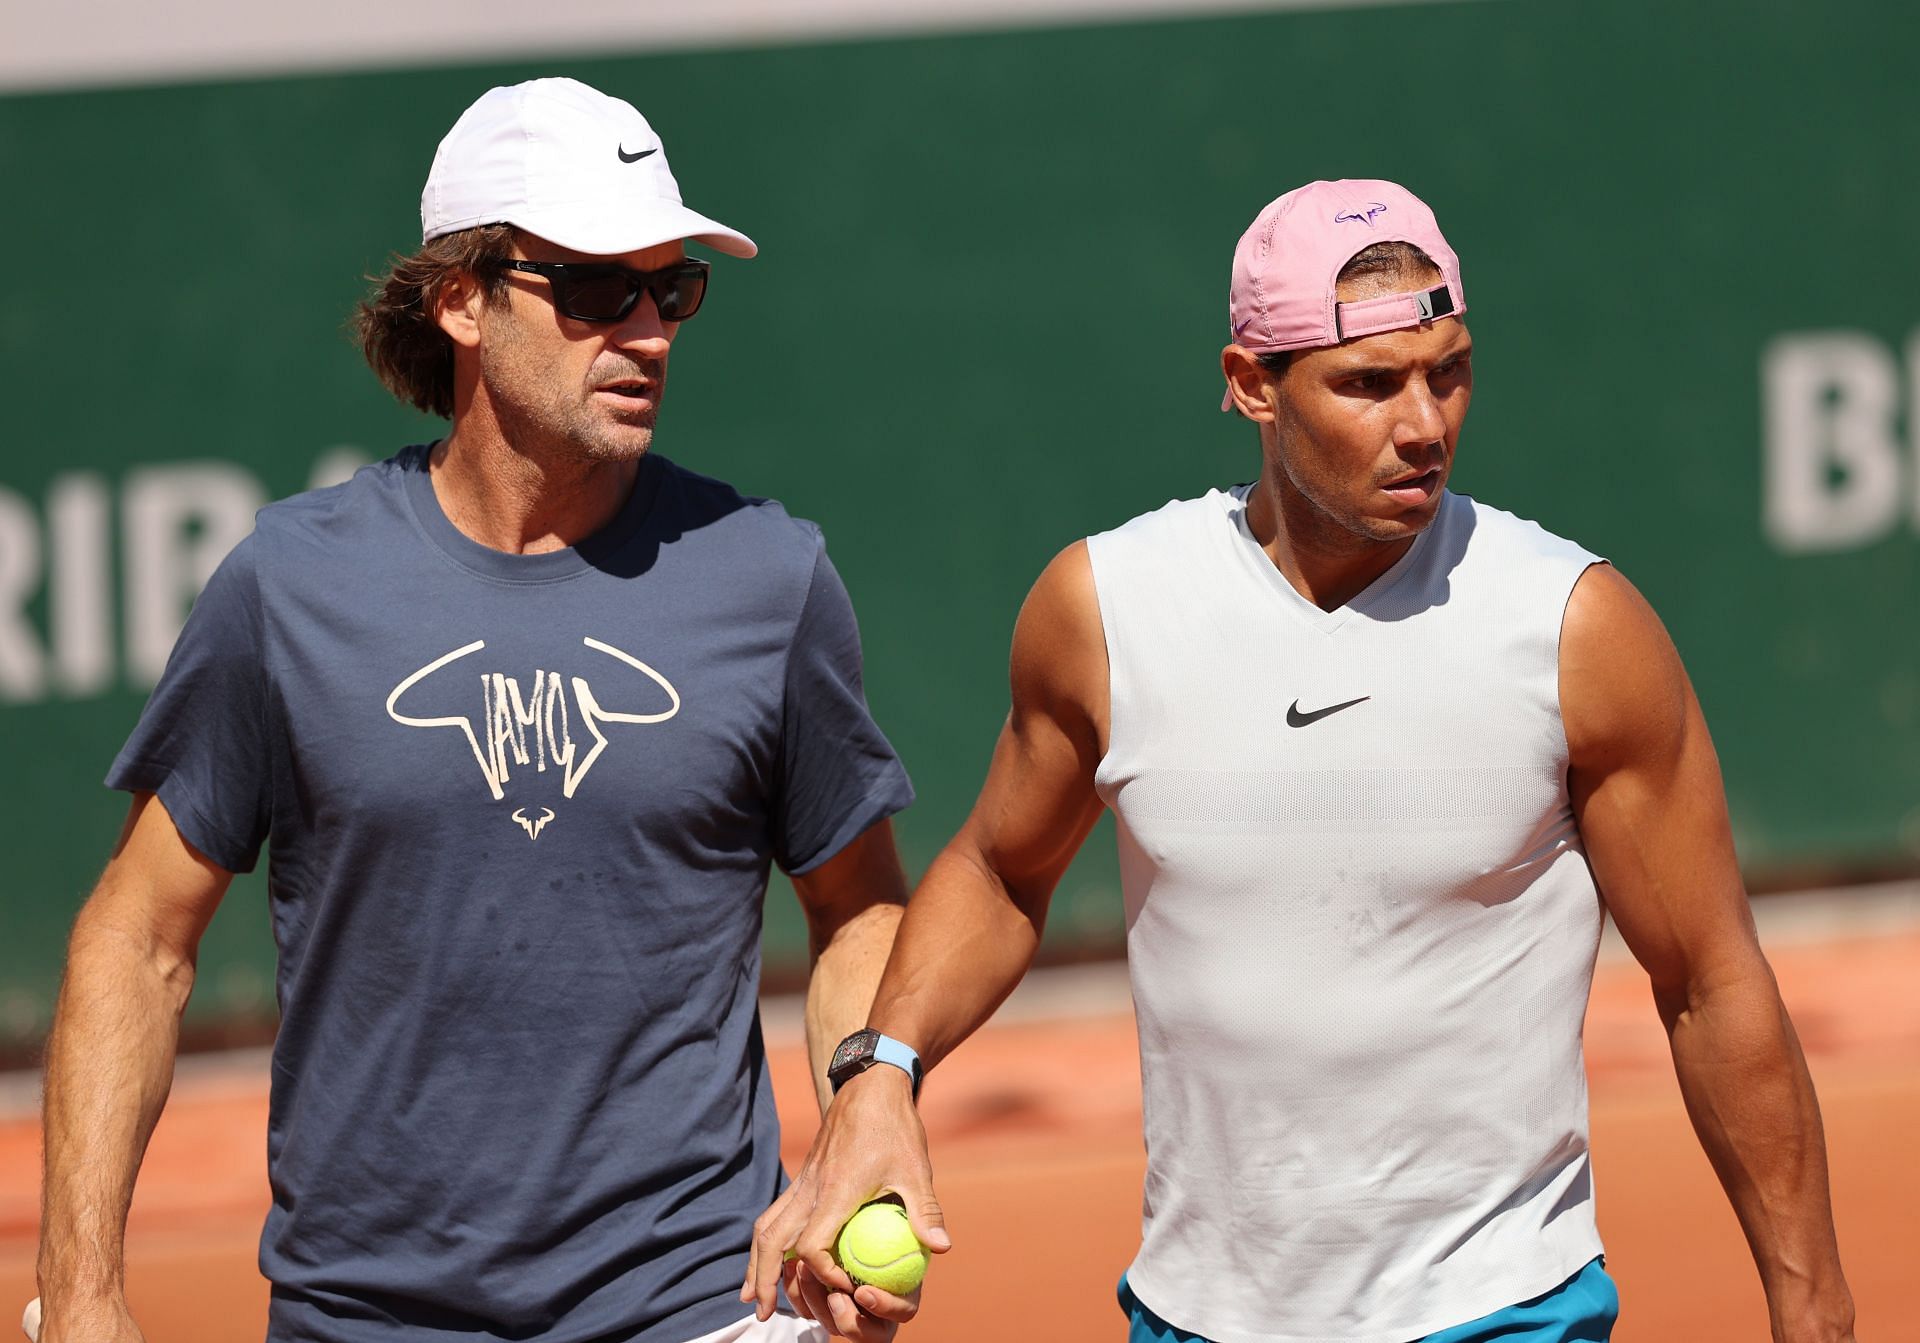 Carlos Moya (L) and Rafael Nadal (R) at the 2021 French Open